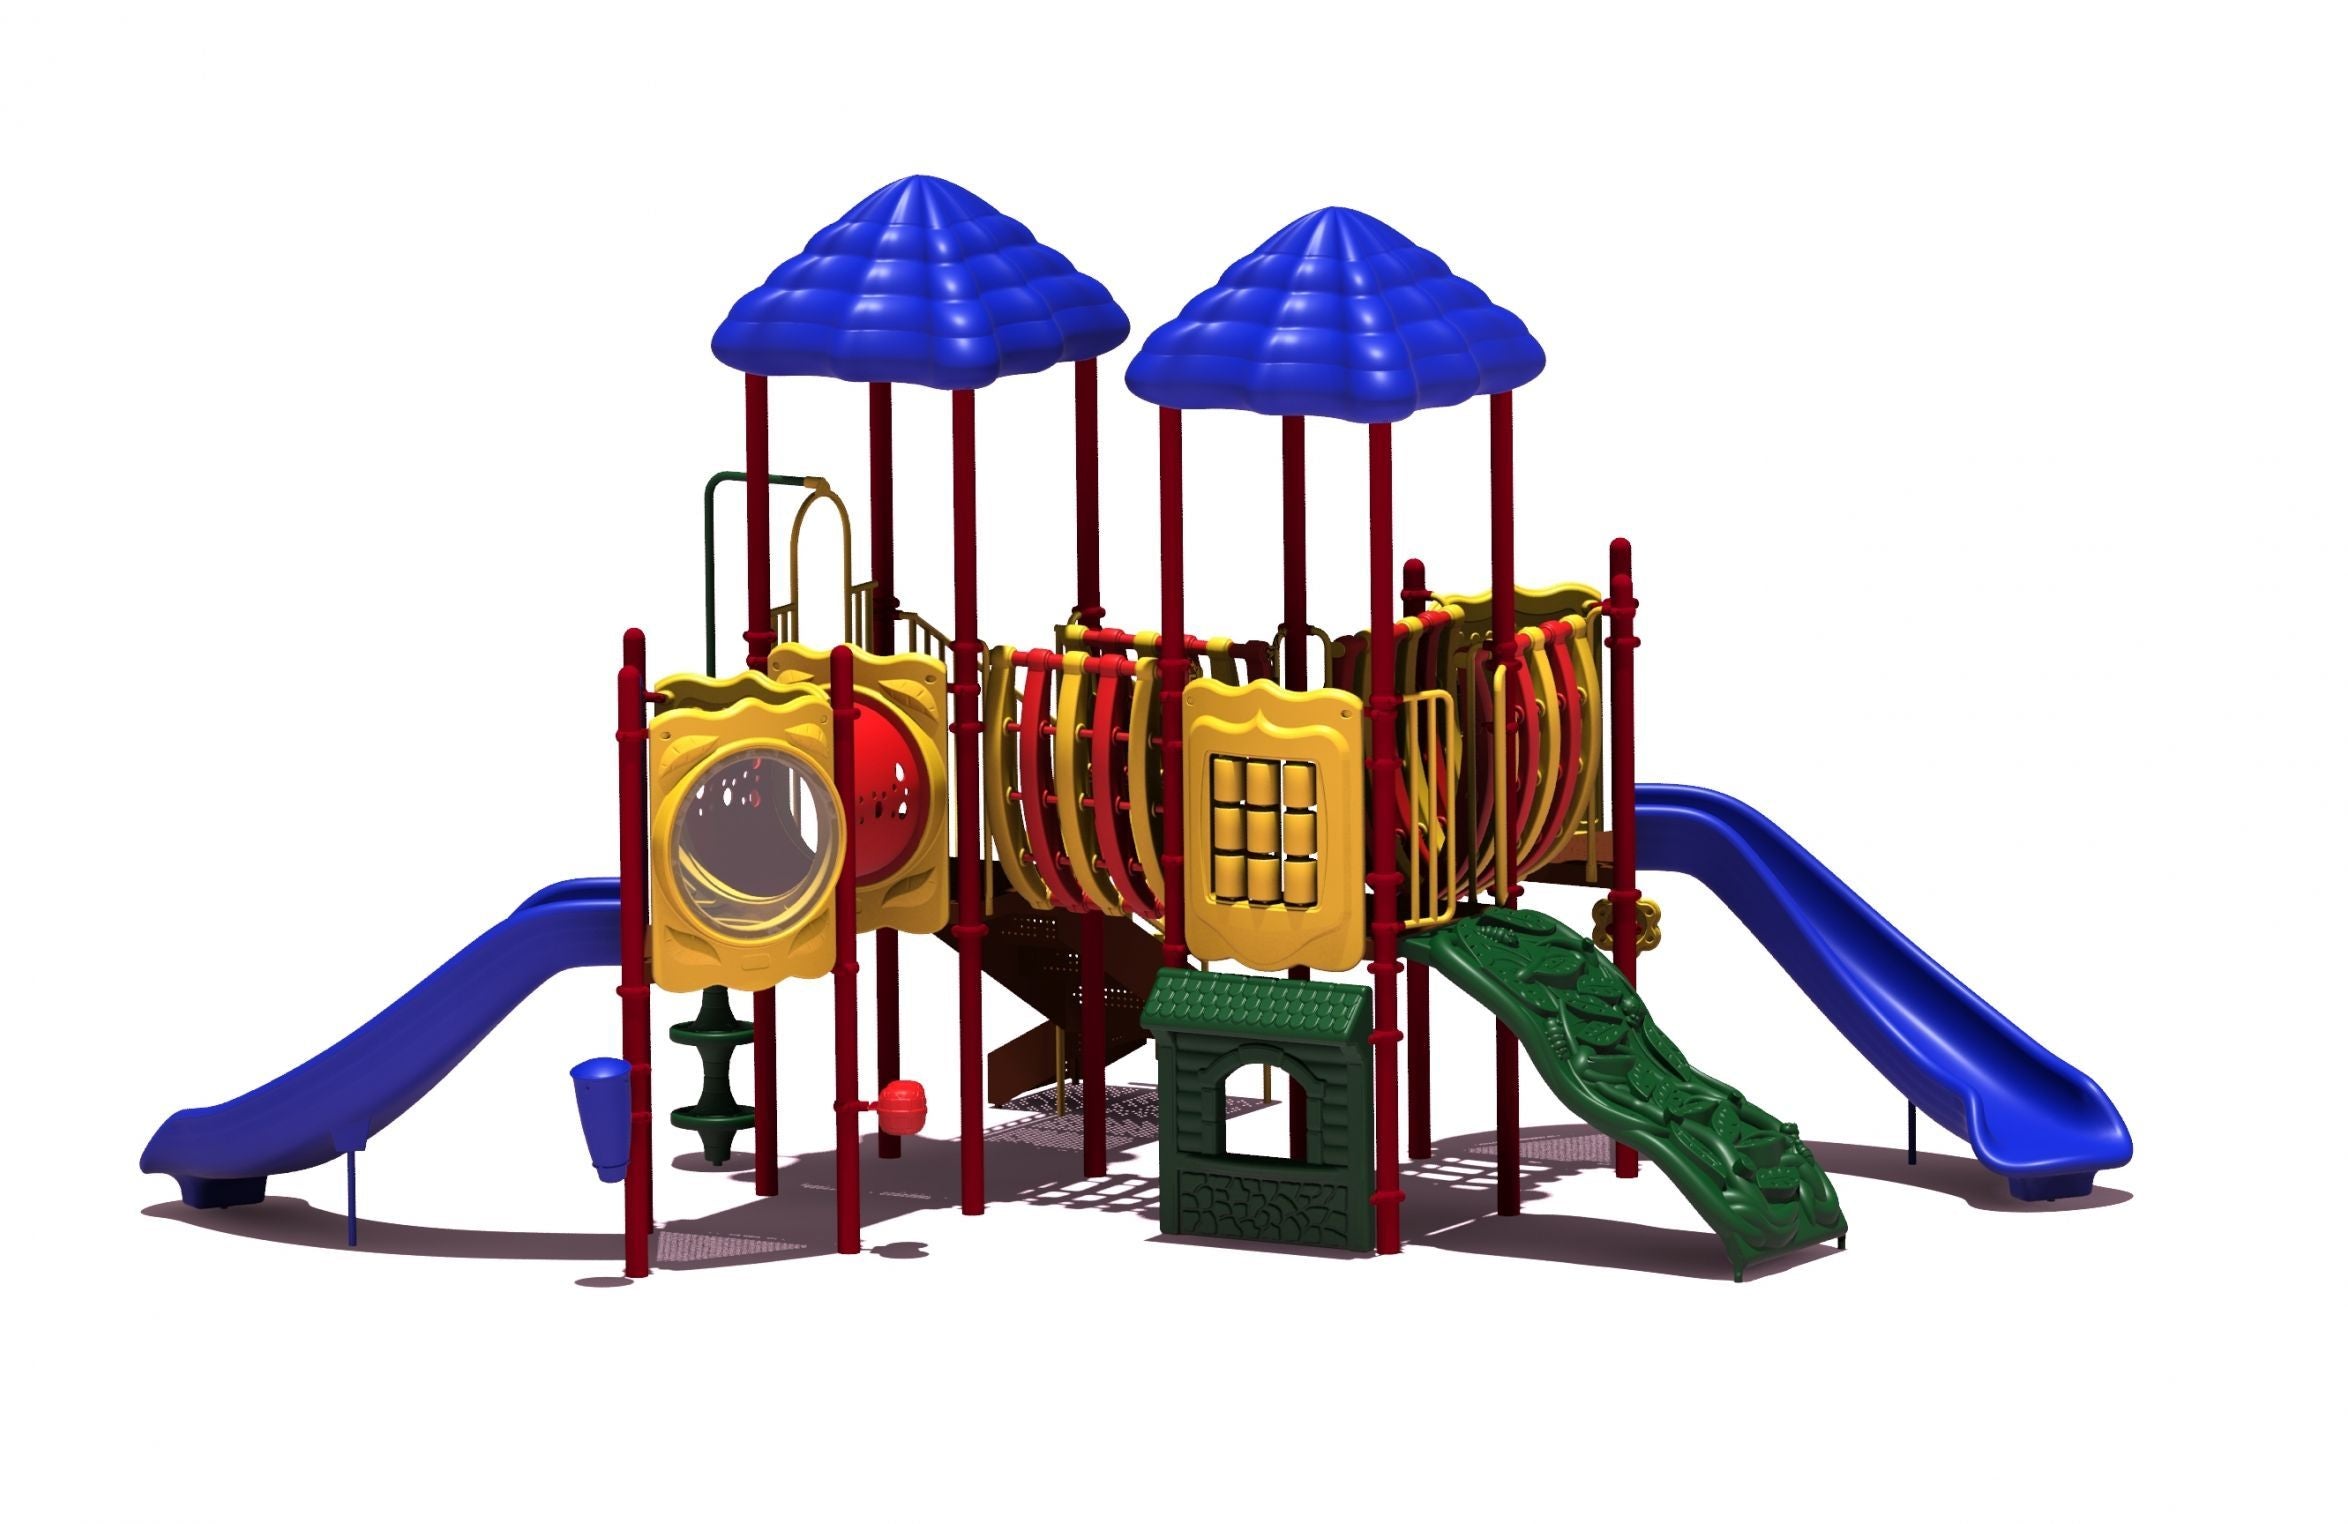 Pike's Peak Play System  | WillyGoat Playground & Park Equipment